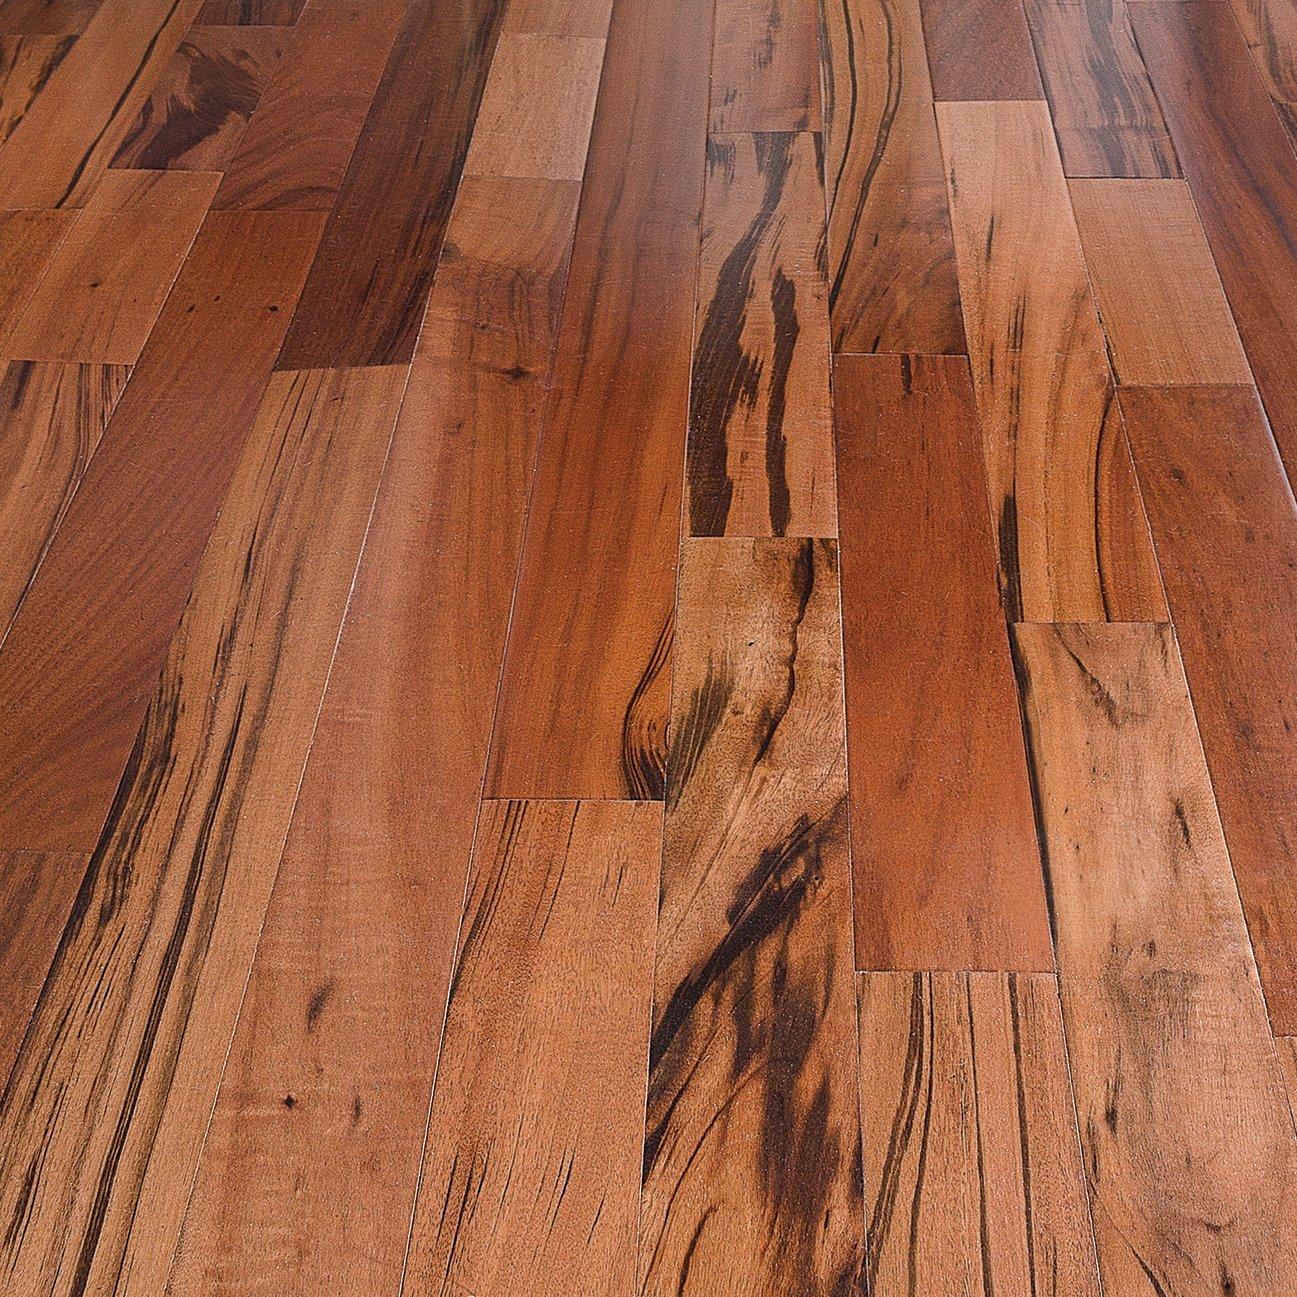 Samp Natural Brazilian Tigerwood Smooth Solid Hardwood Floor And Decor